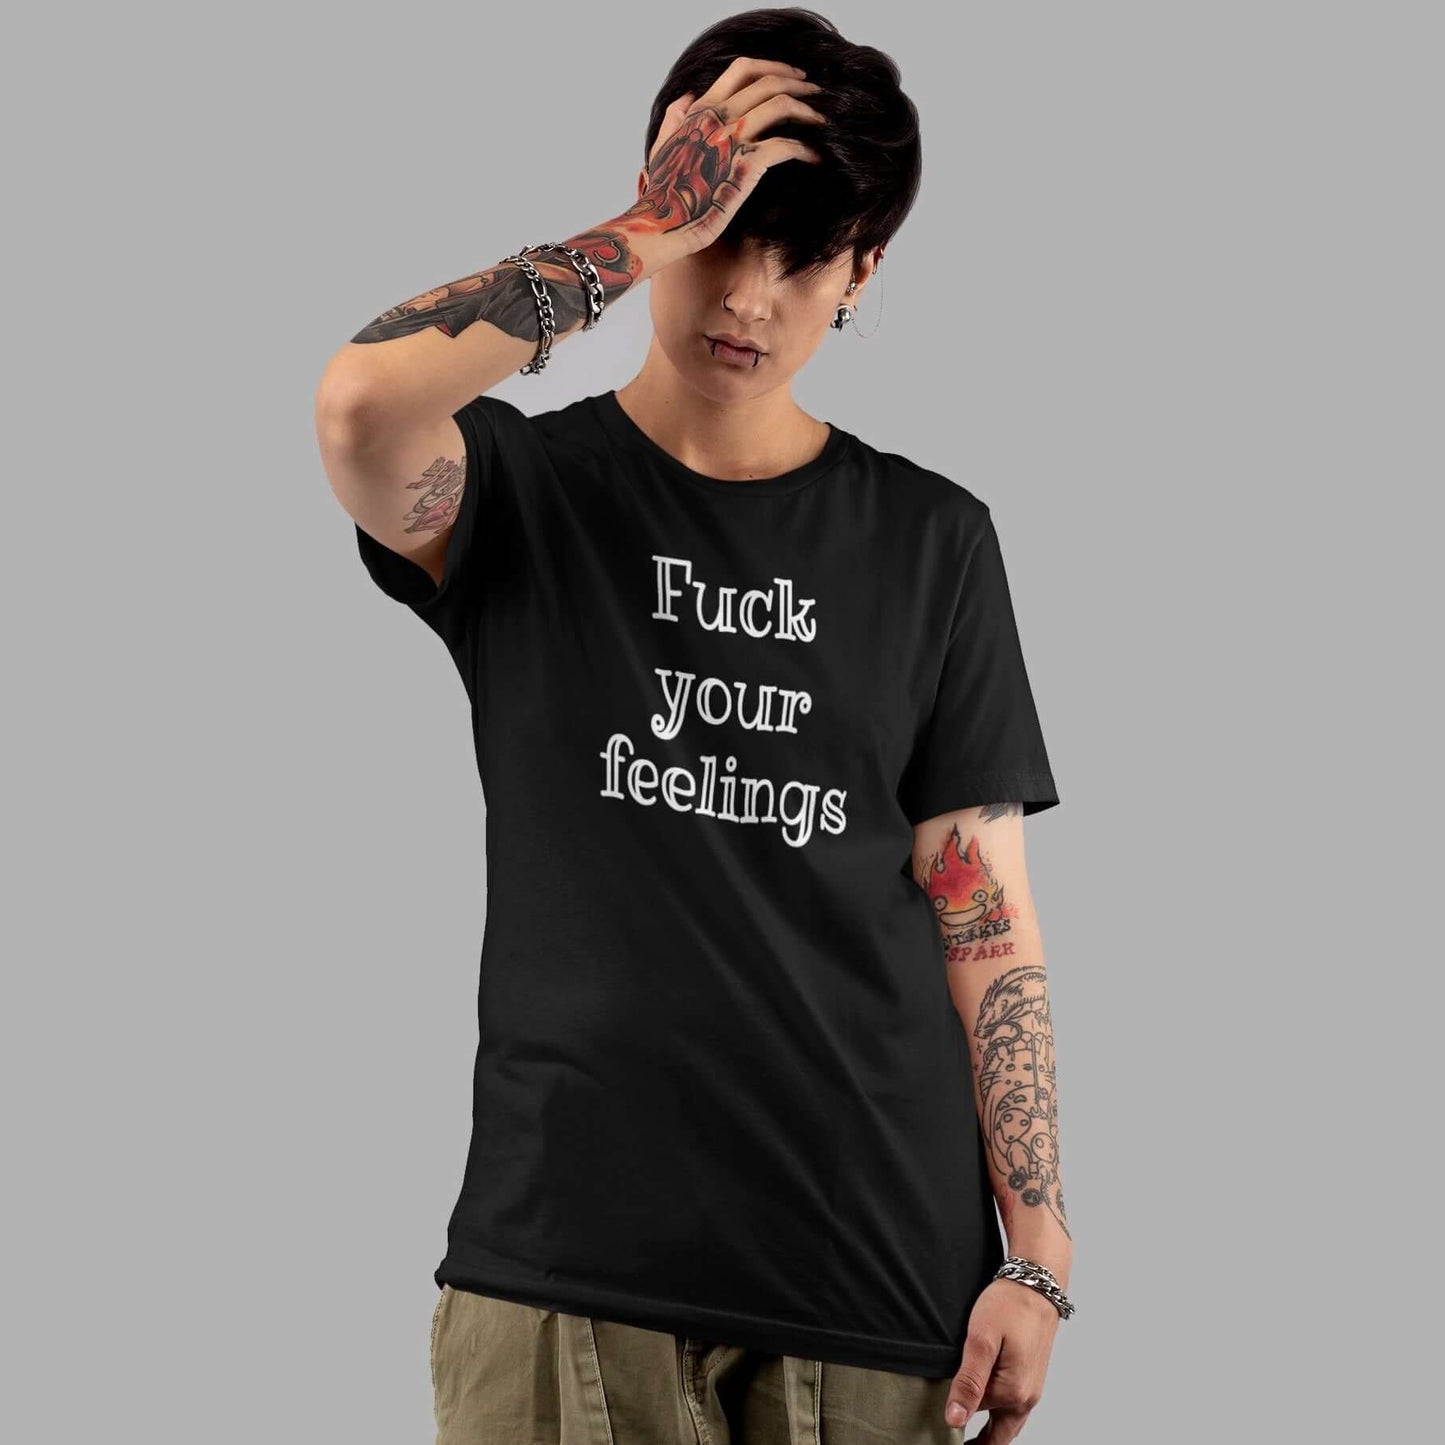 Fuck your feelings T-Shirt